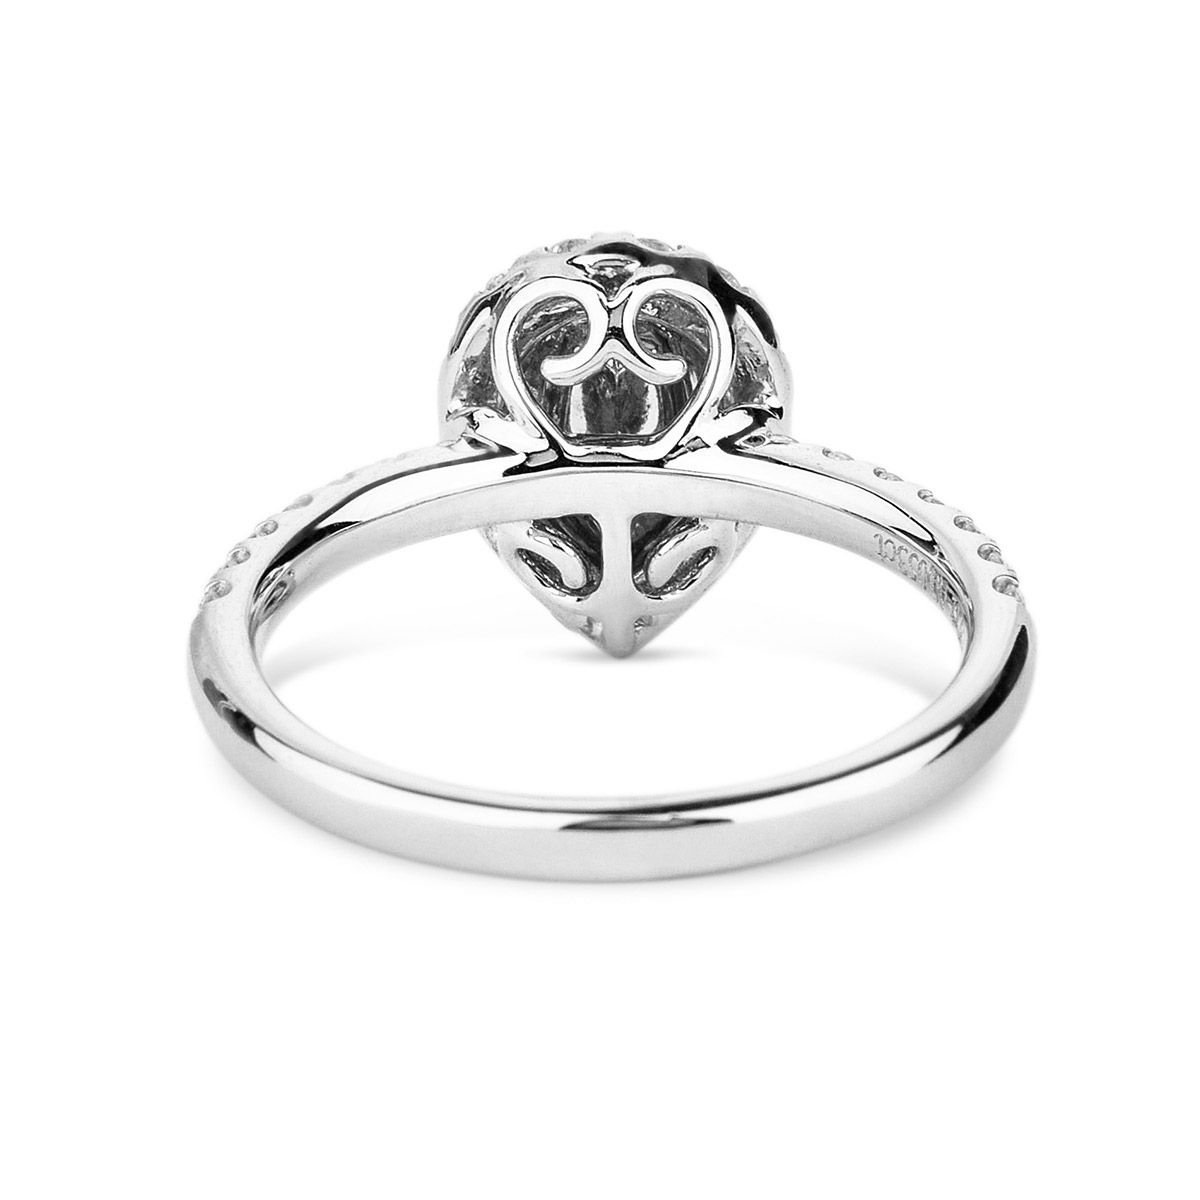 Light Pinkish Brown Diamond Ring, 0.27 Ct. (1.26 Ct. TW), Pear shape, GIA Certified, 1182100047